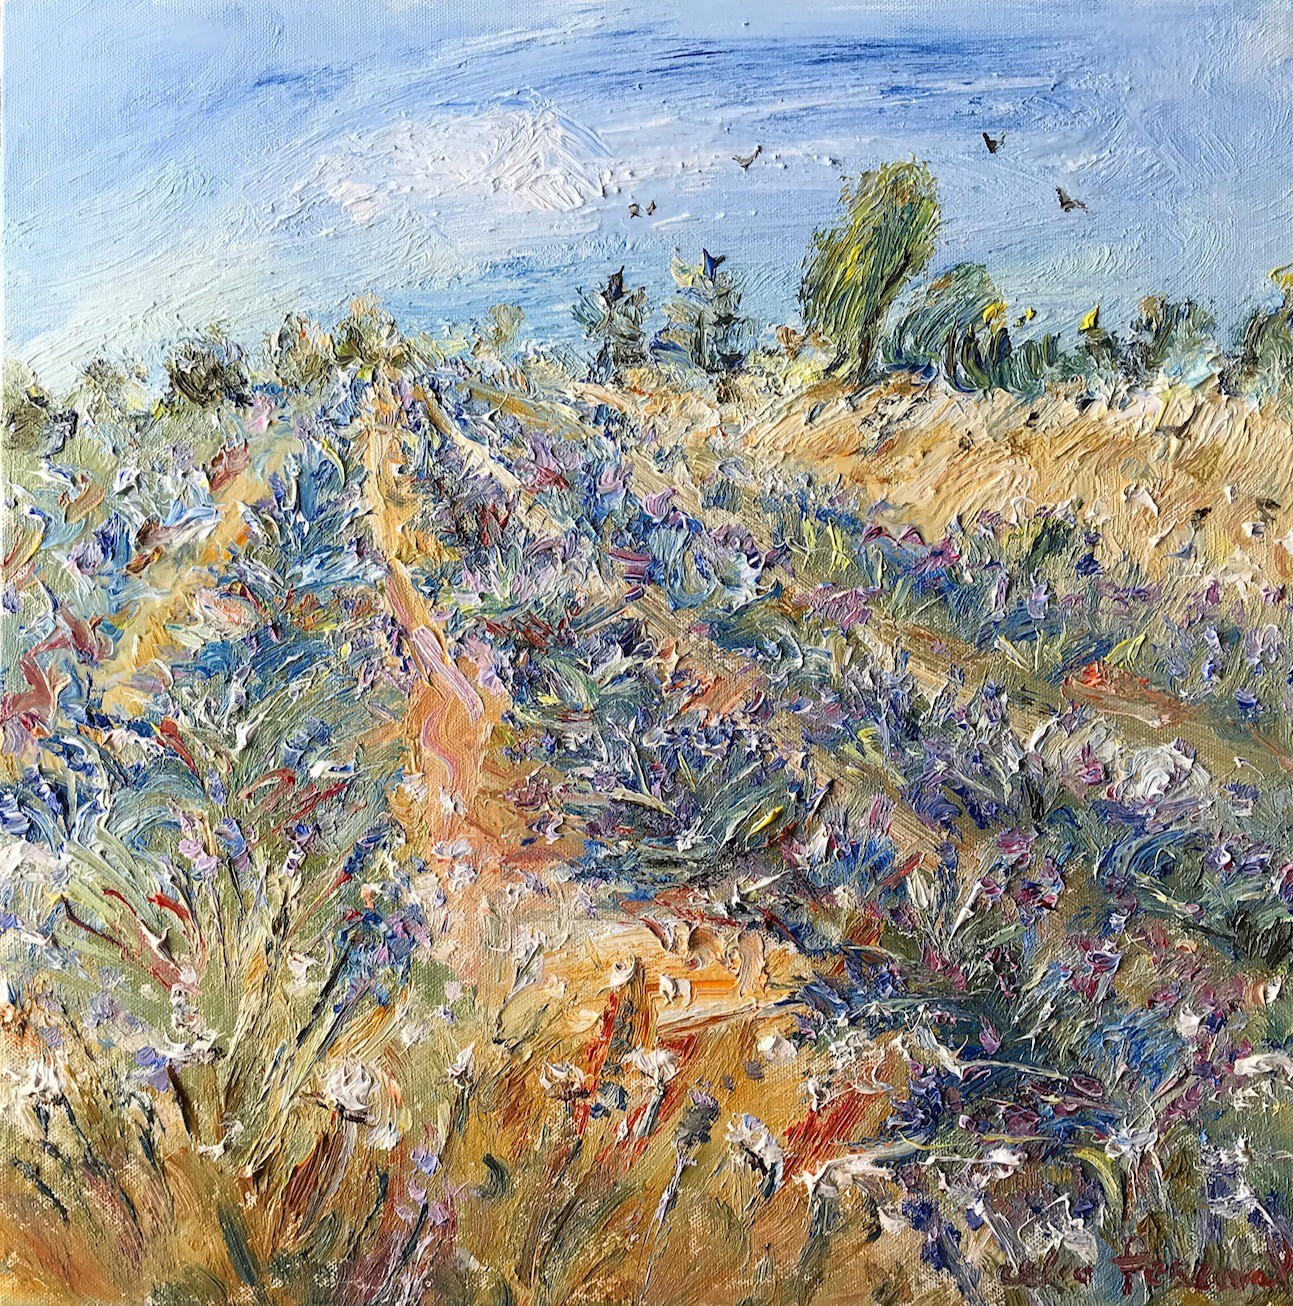 Perceval_Lavnedar Fields above Castellane,France_oil on canvas _ 40x40 three